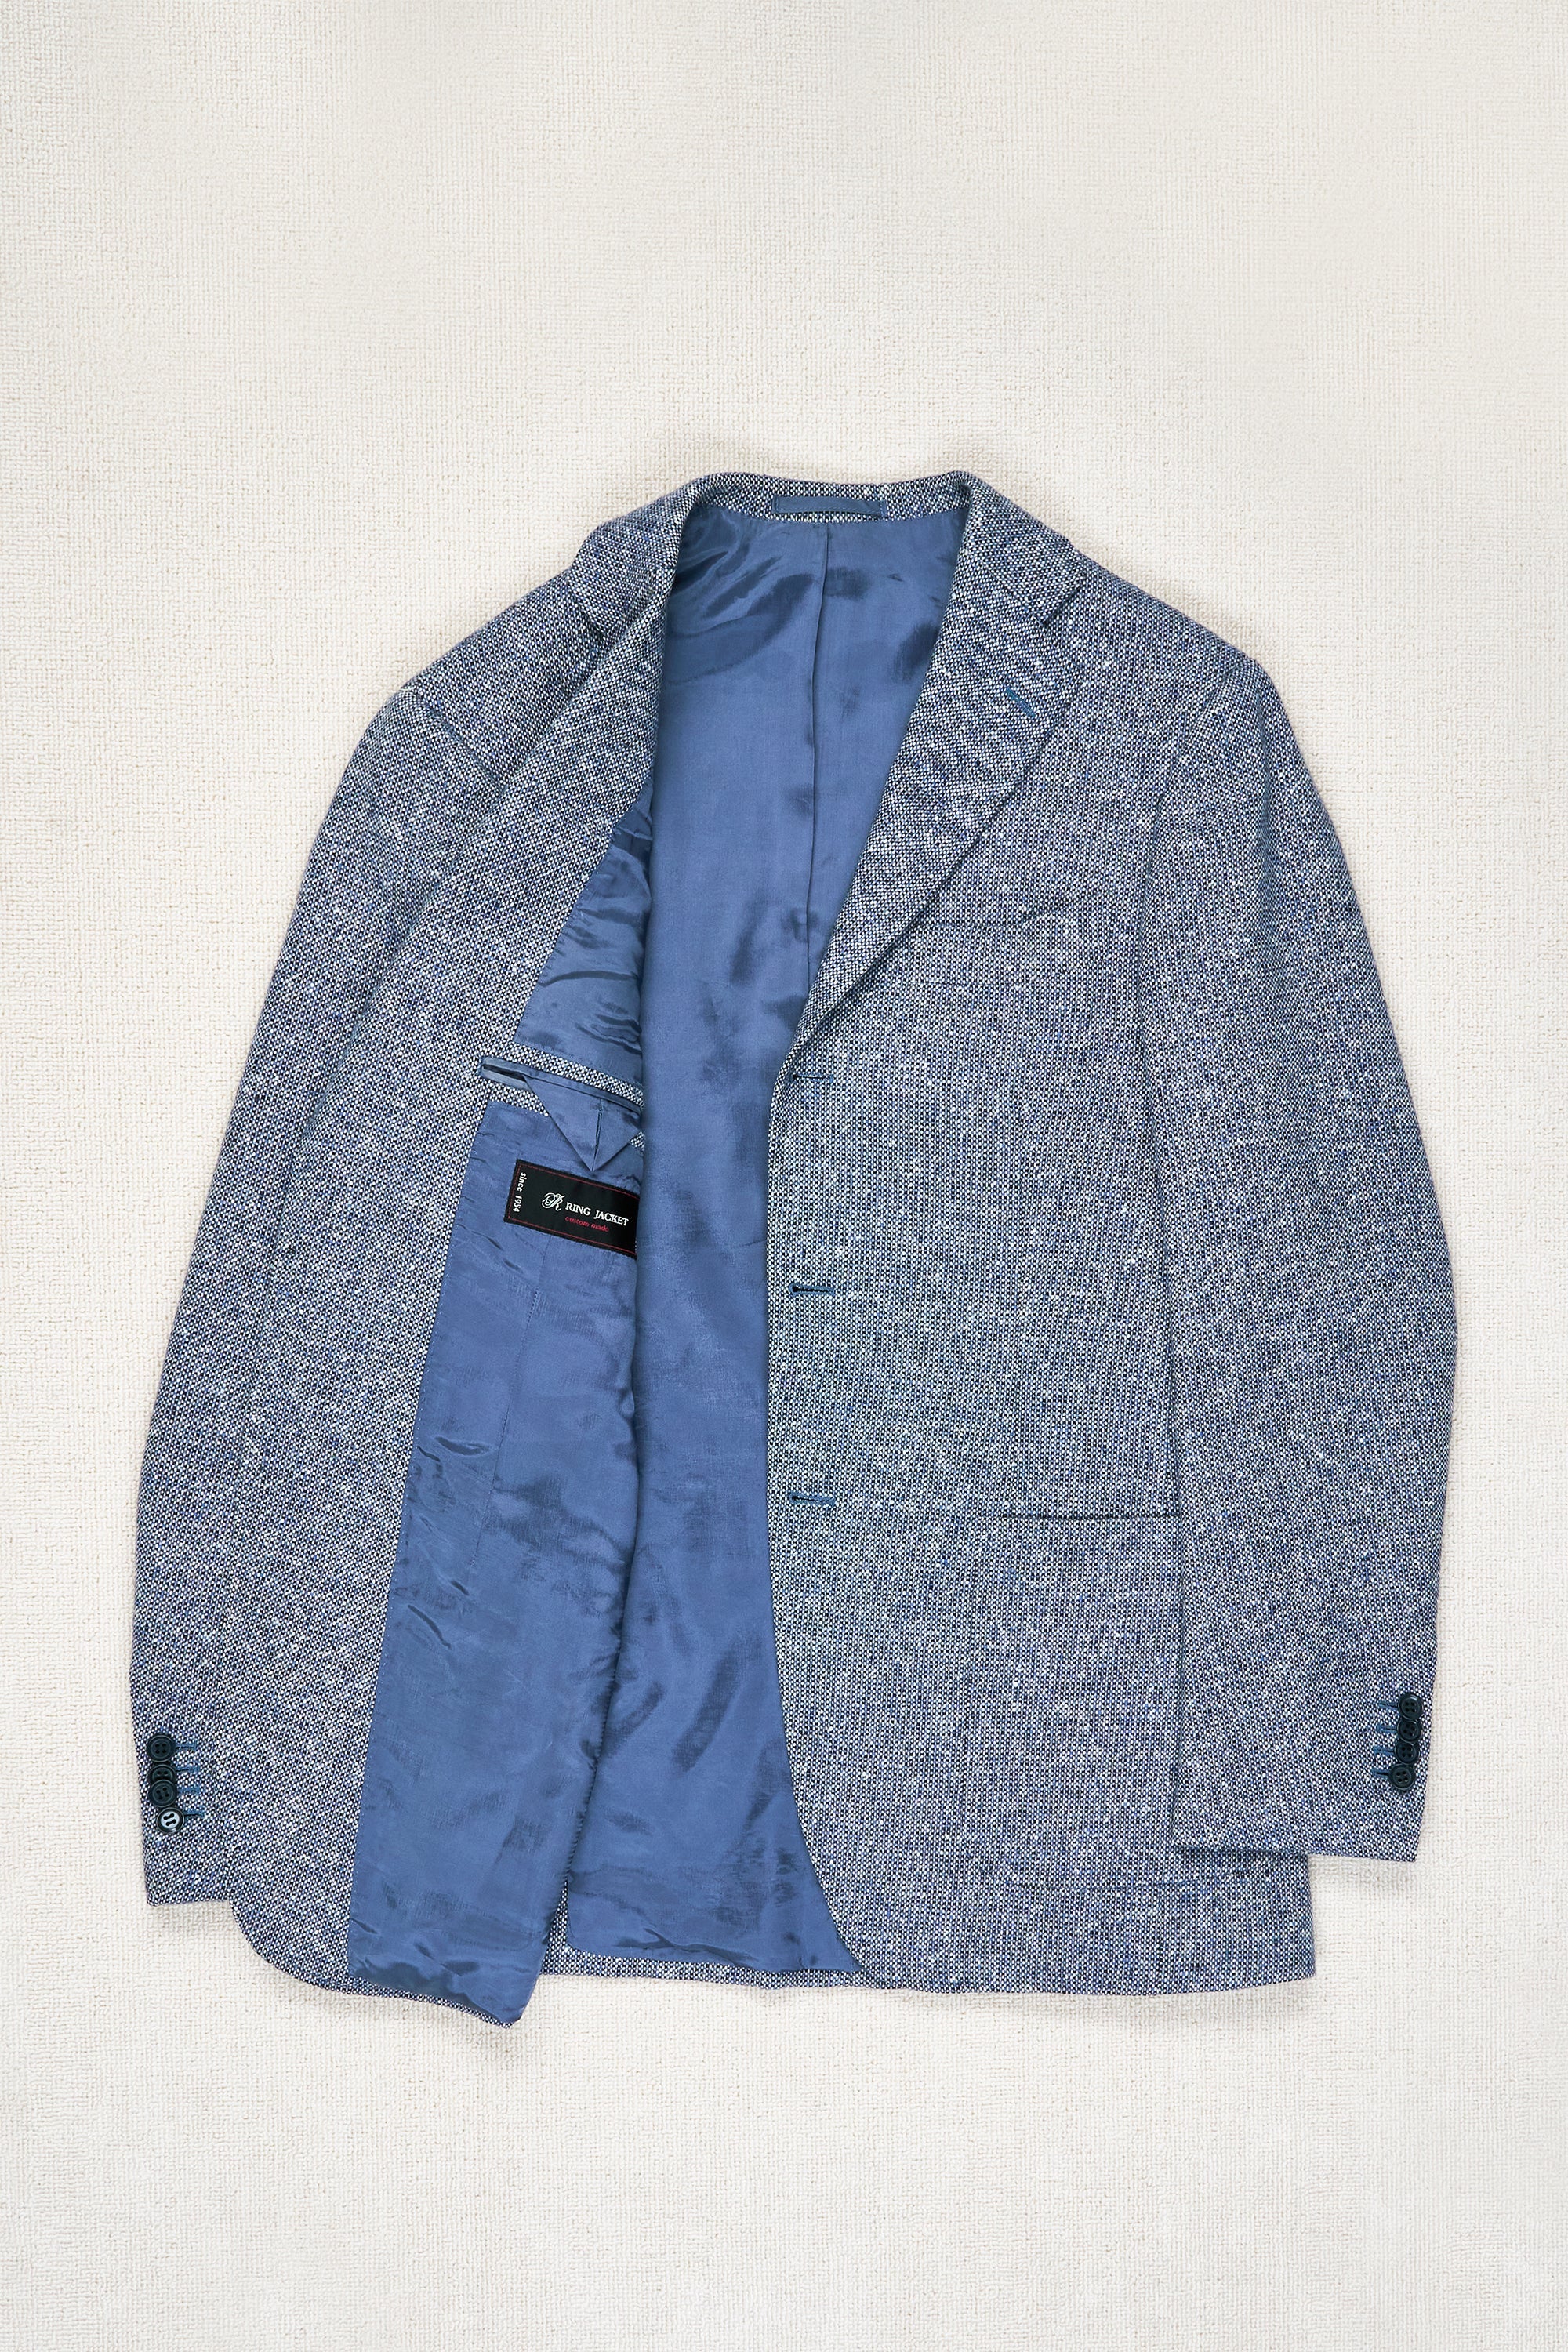 Ring Jacket Light Blue/White/Black Wool/Camel/Cashmere Weave Sport Coat Bespoke